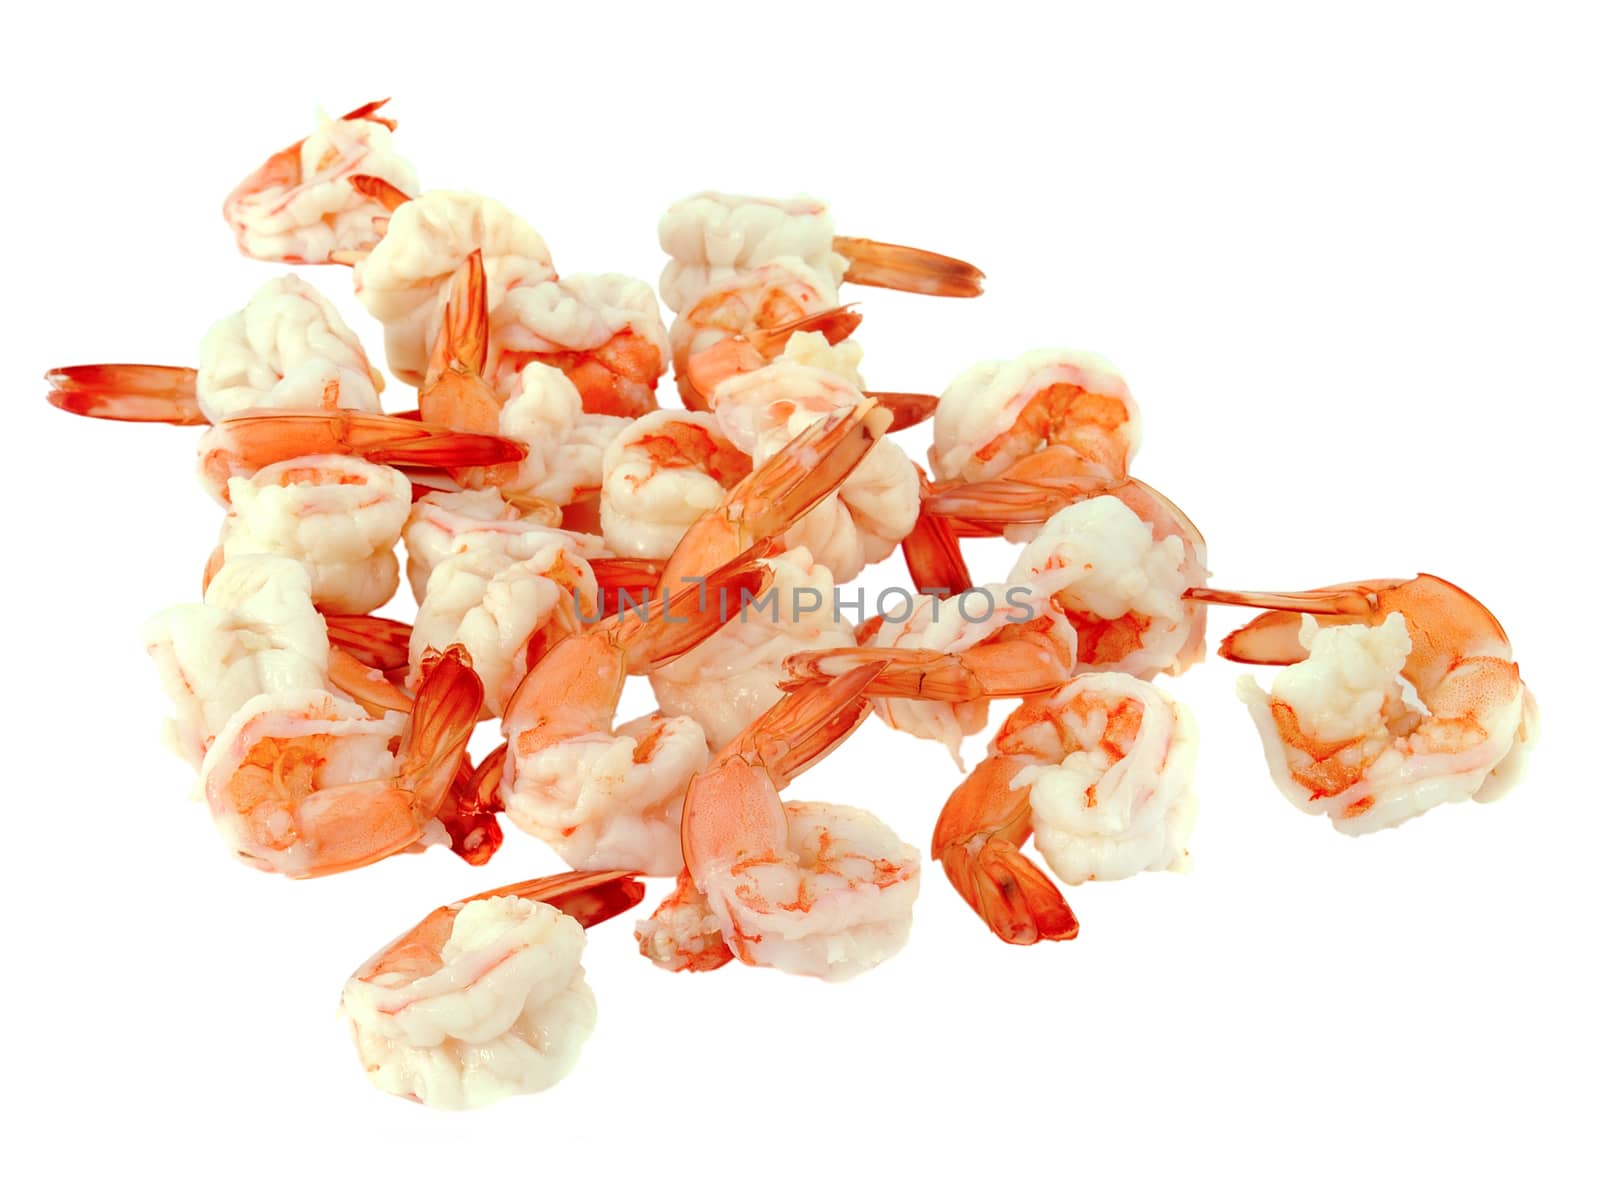  shrimps on a white background